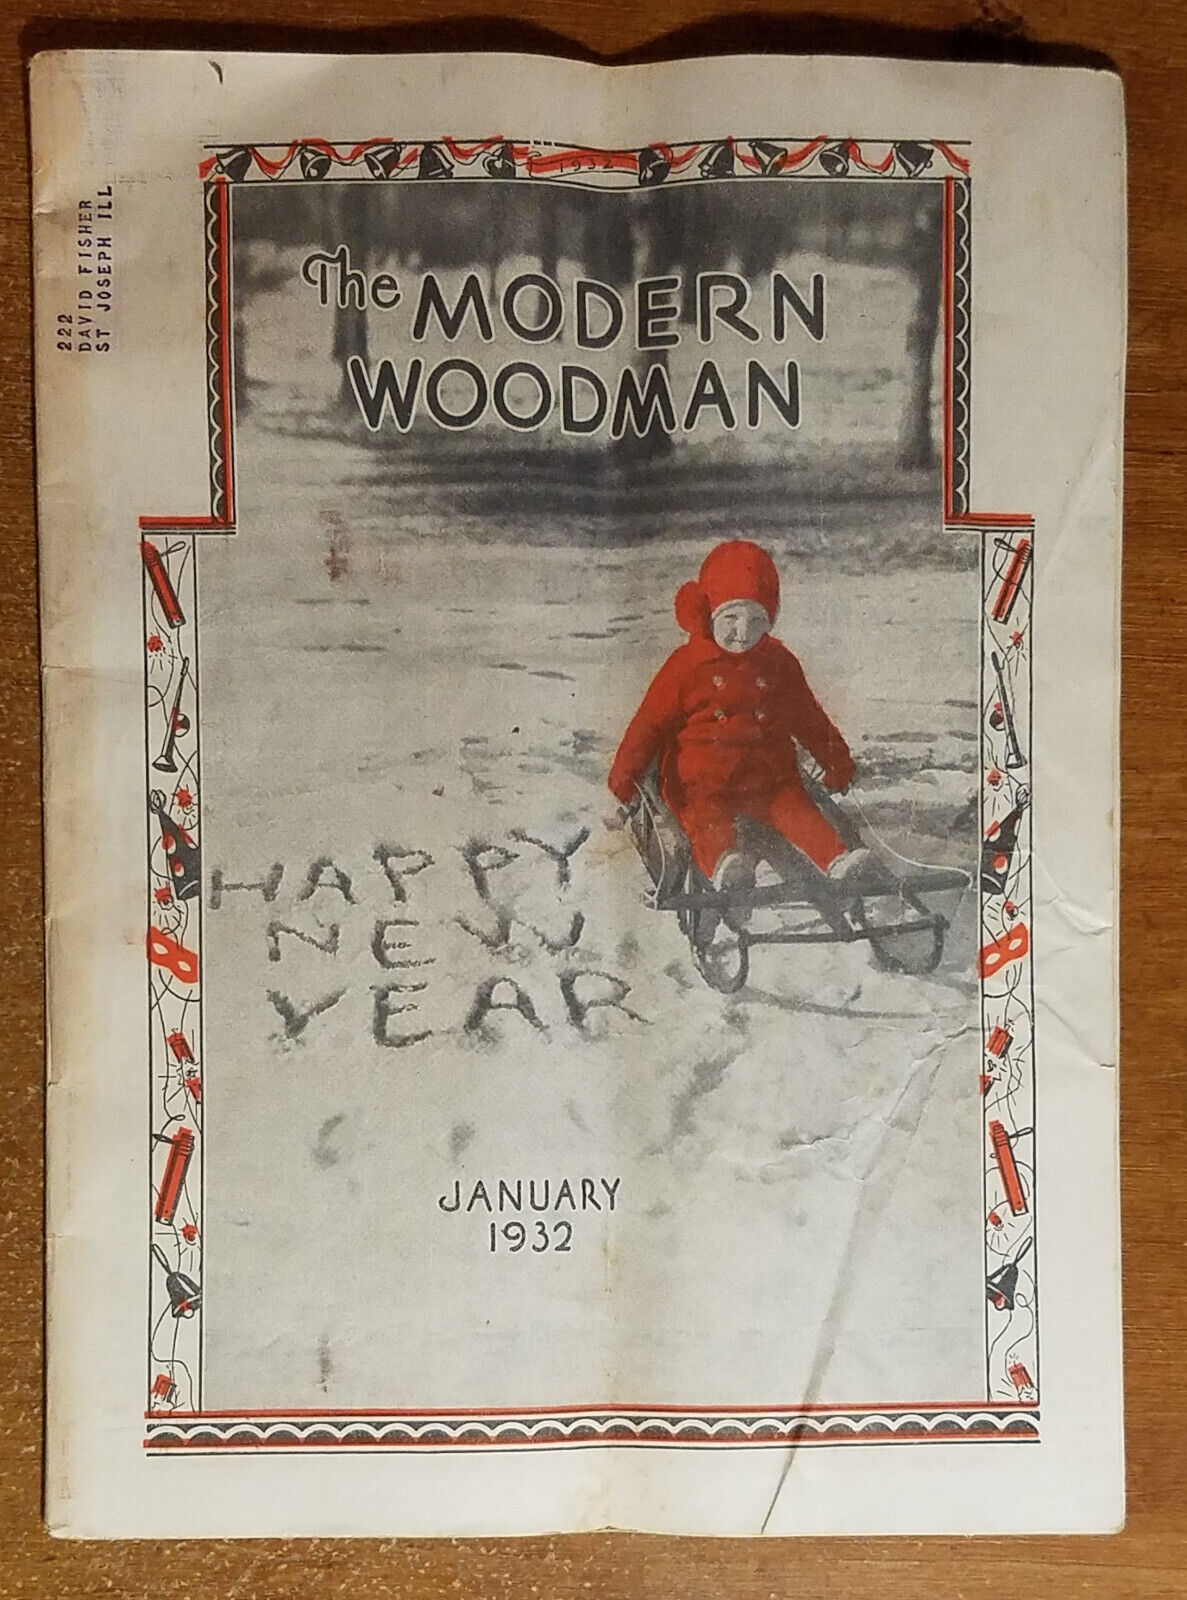 January 1932 Modern Woodman Magazine, Child Sledding Cover